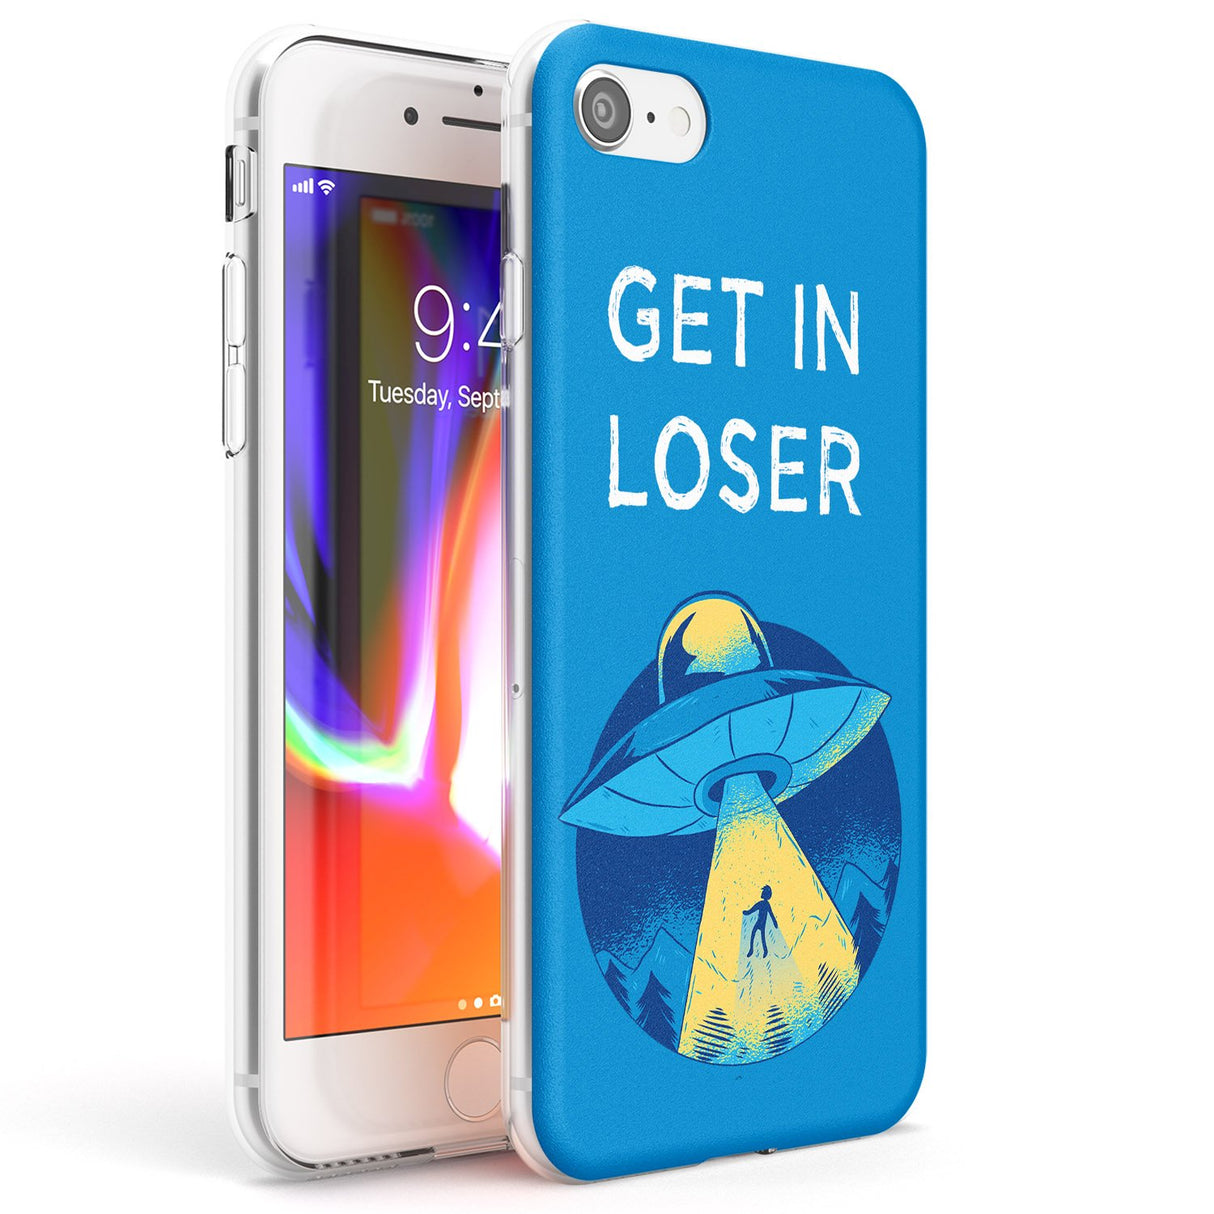 Get in Loser UFO Phone Case iPhone 7/8 / Clear Case,iPhone SE / Clear Case Blanc Space